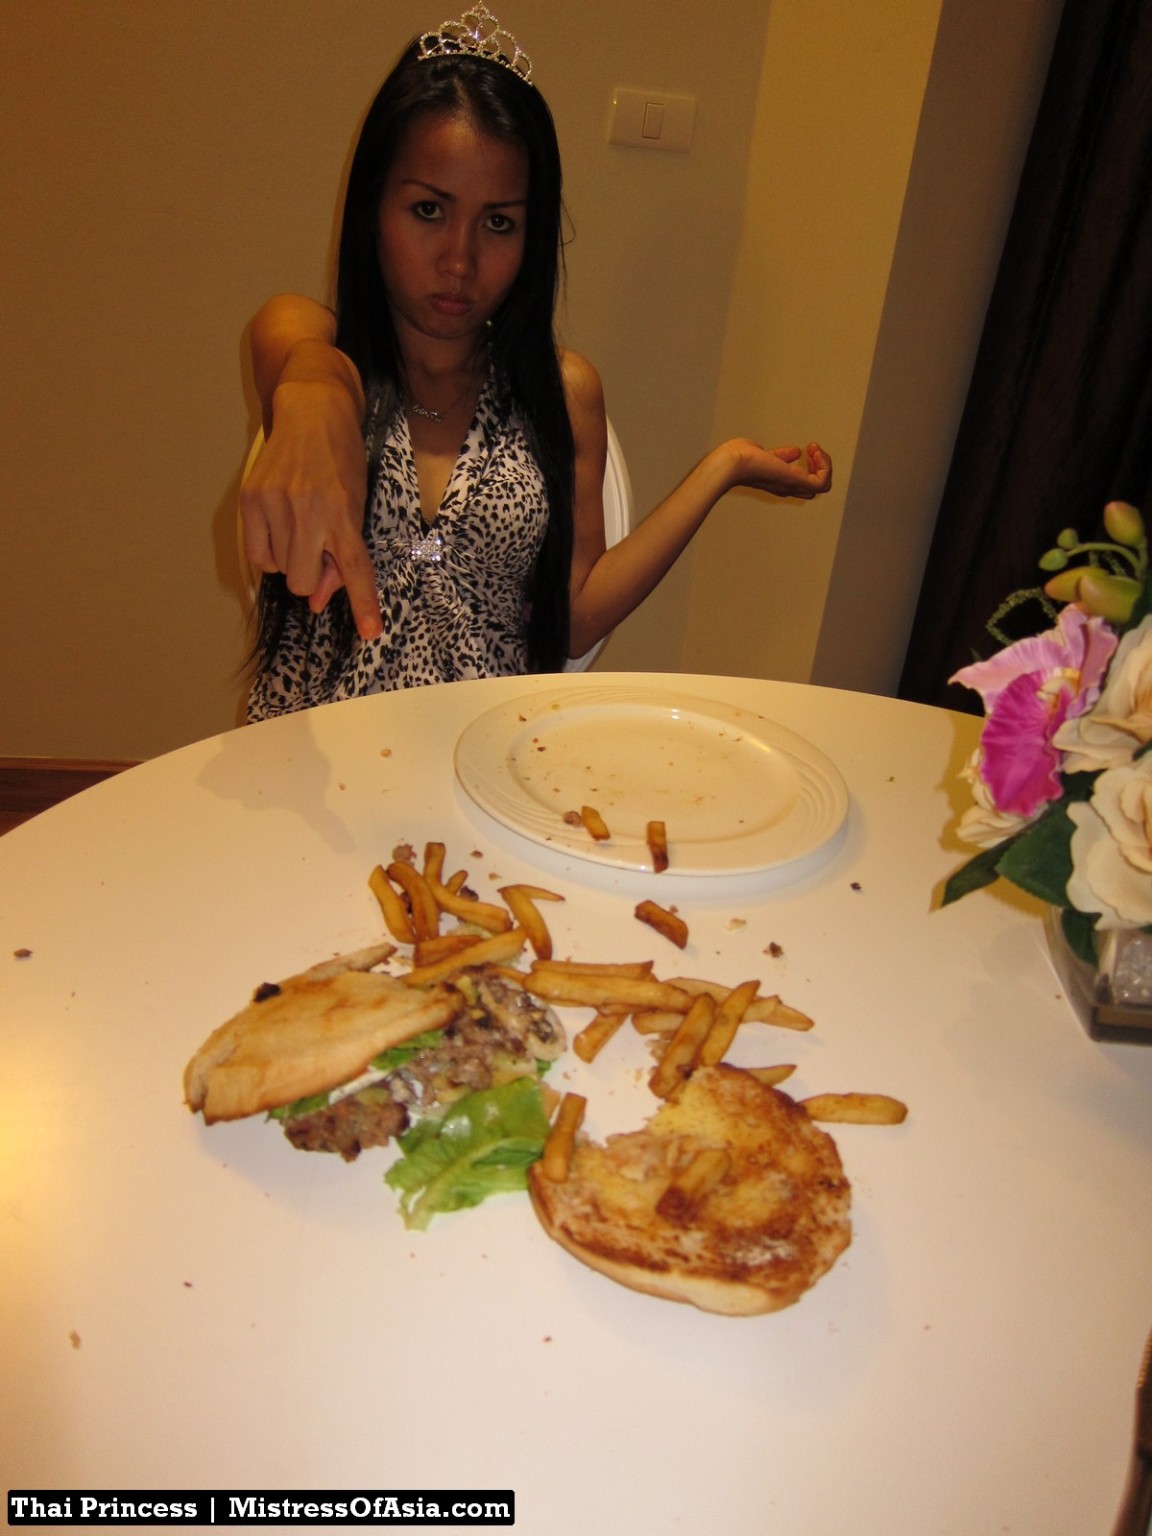 Thai Princess eating burger #69740320